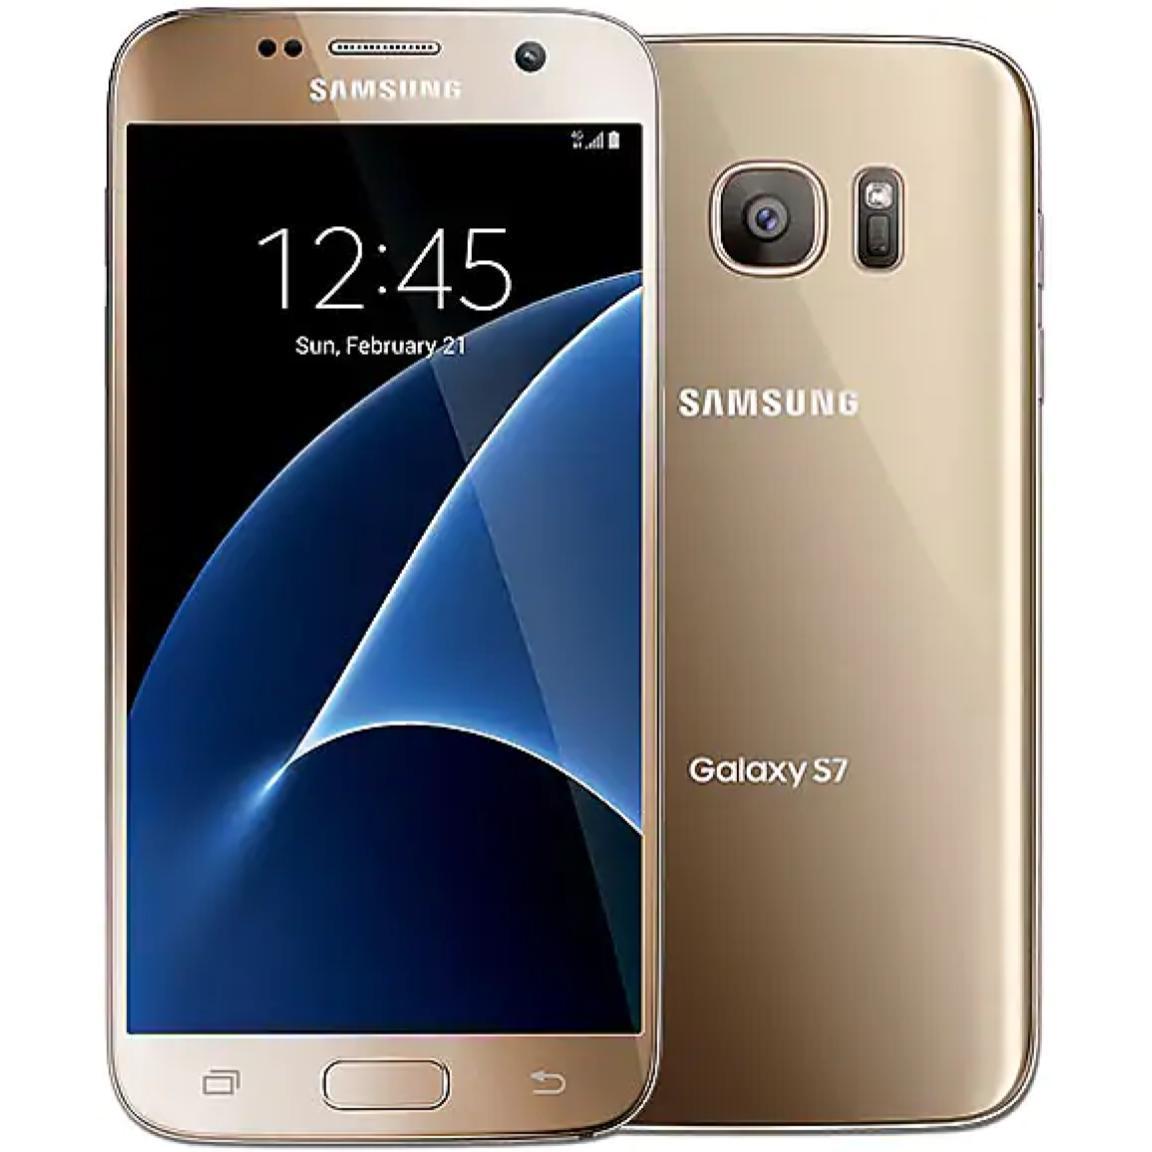 Samsung Galaxy S7 32 GB Unlocked Phone - G930FD Dual SIM - Platinum Gold | All for women